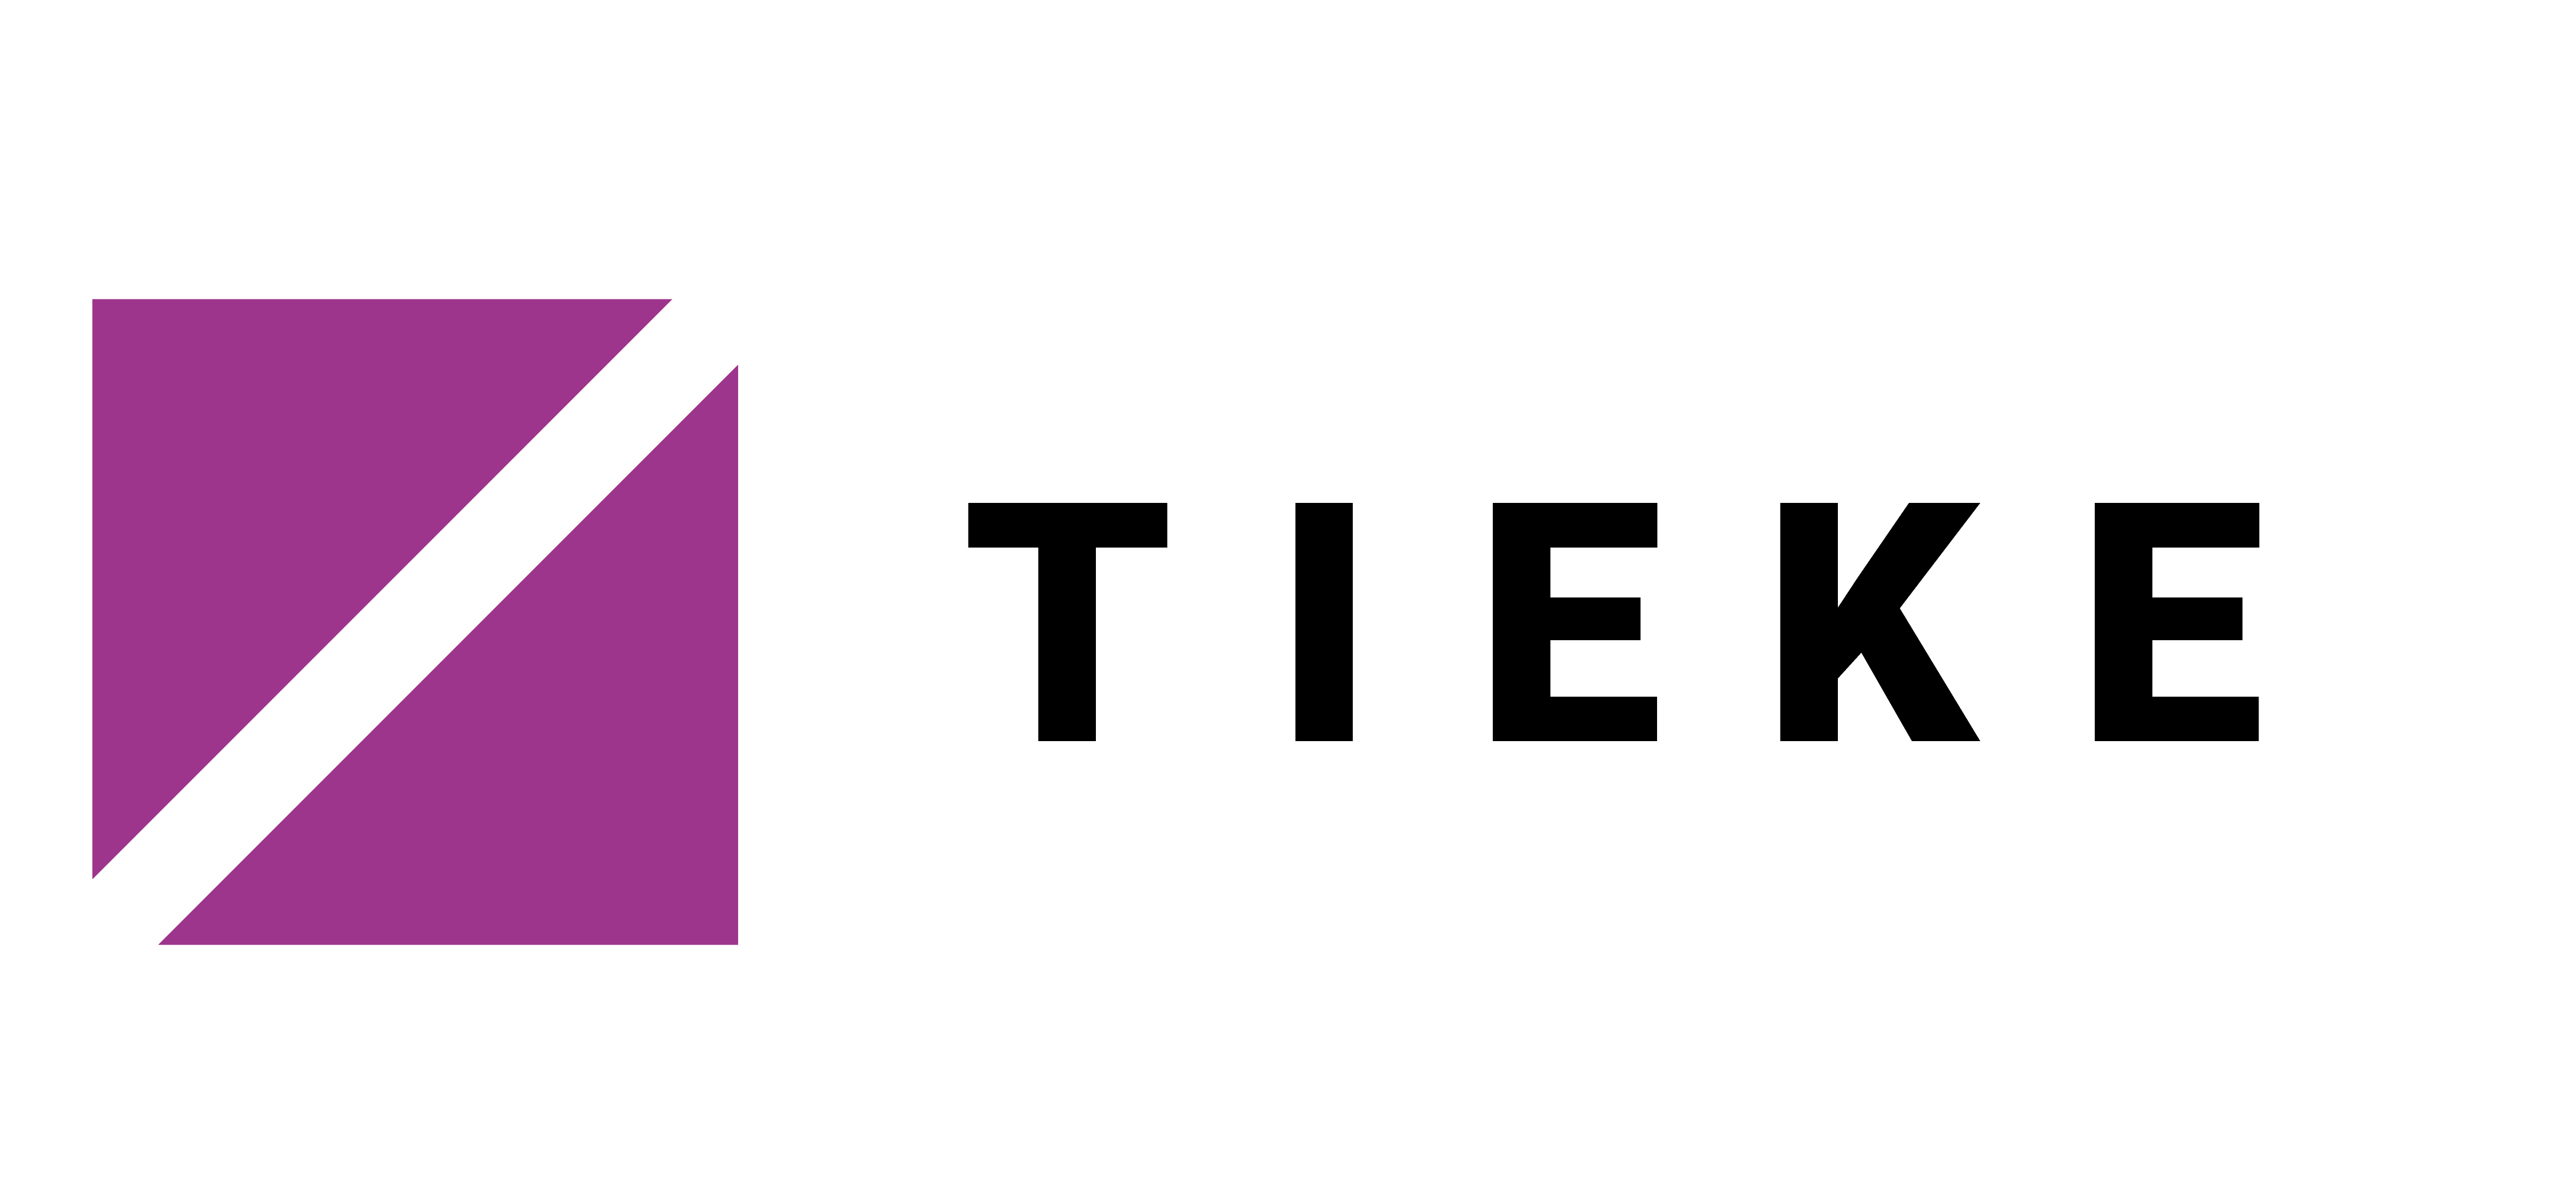 TIEKE Tietoyhteiskunnan kehittämiskeskus ry:n logo